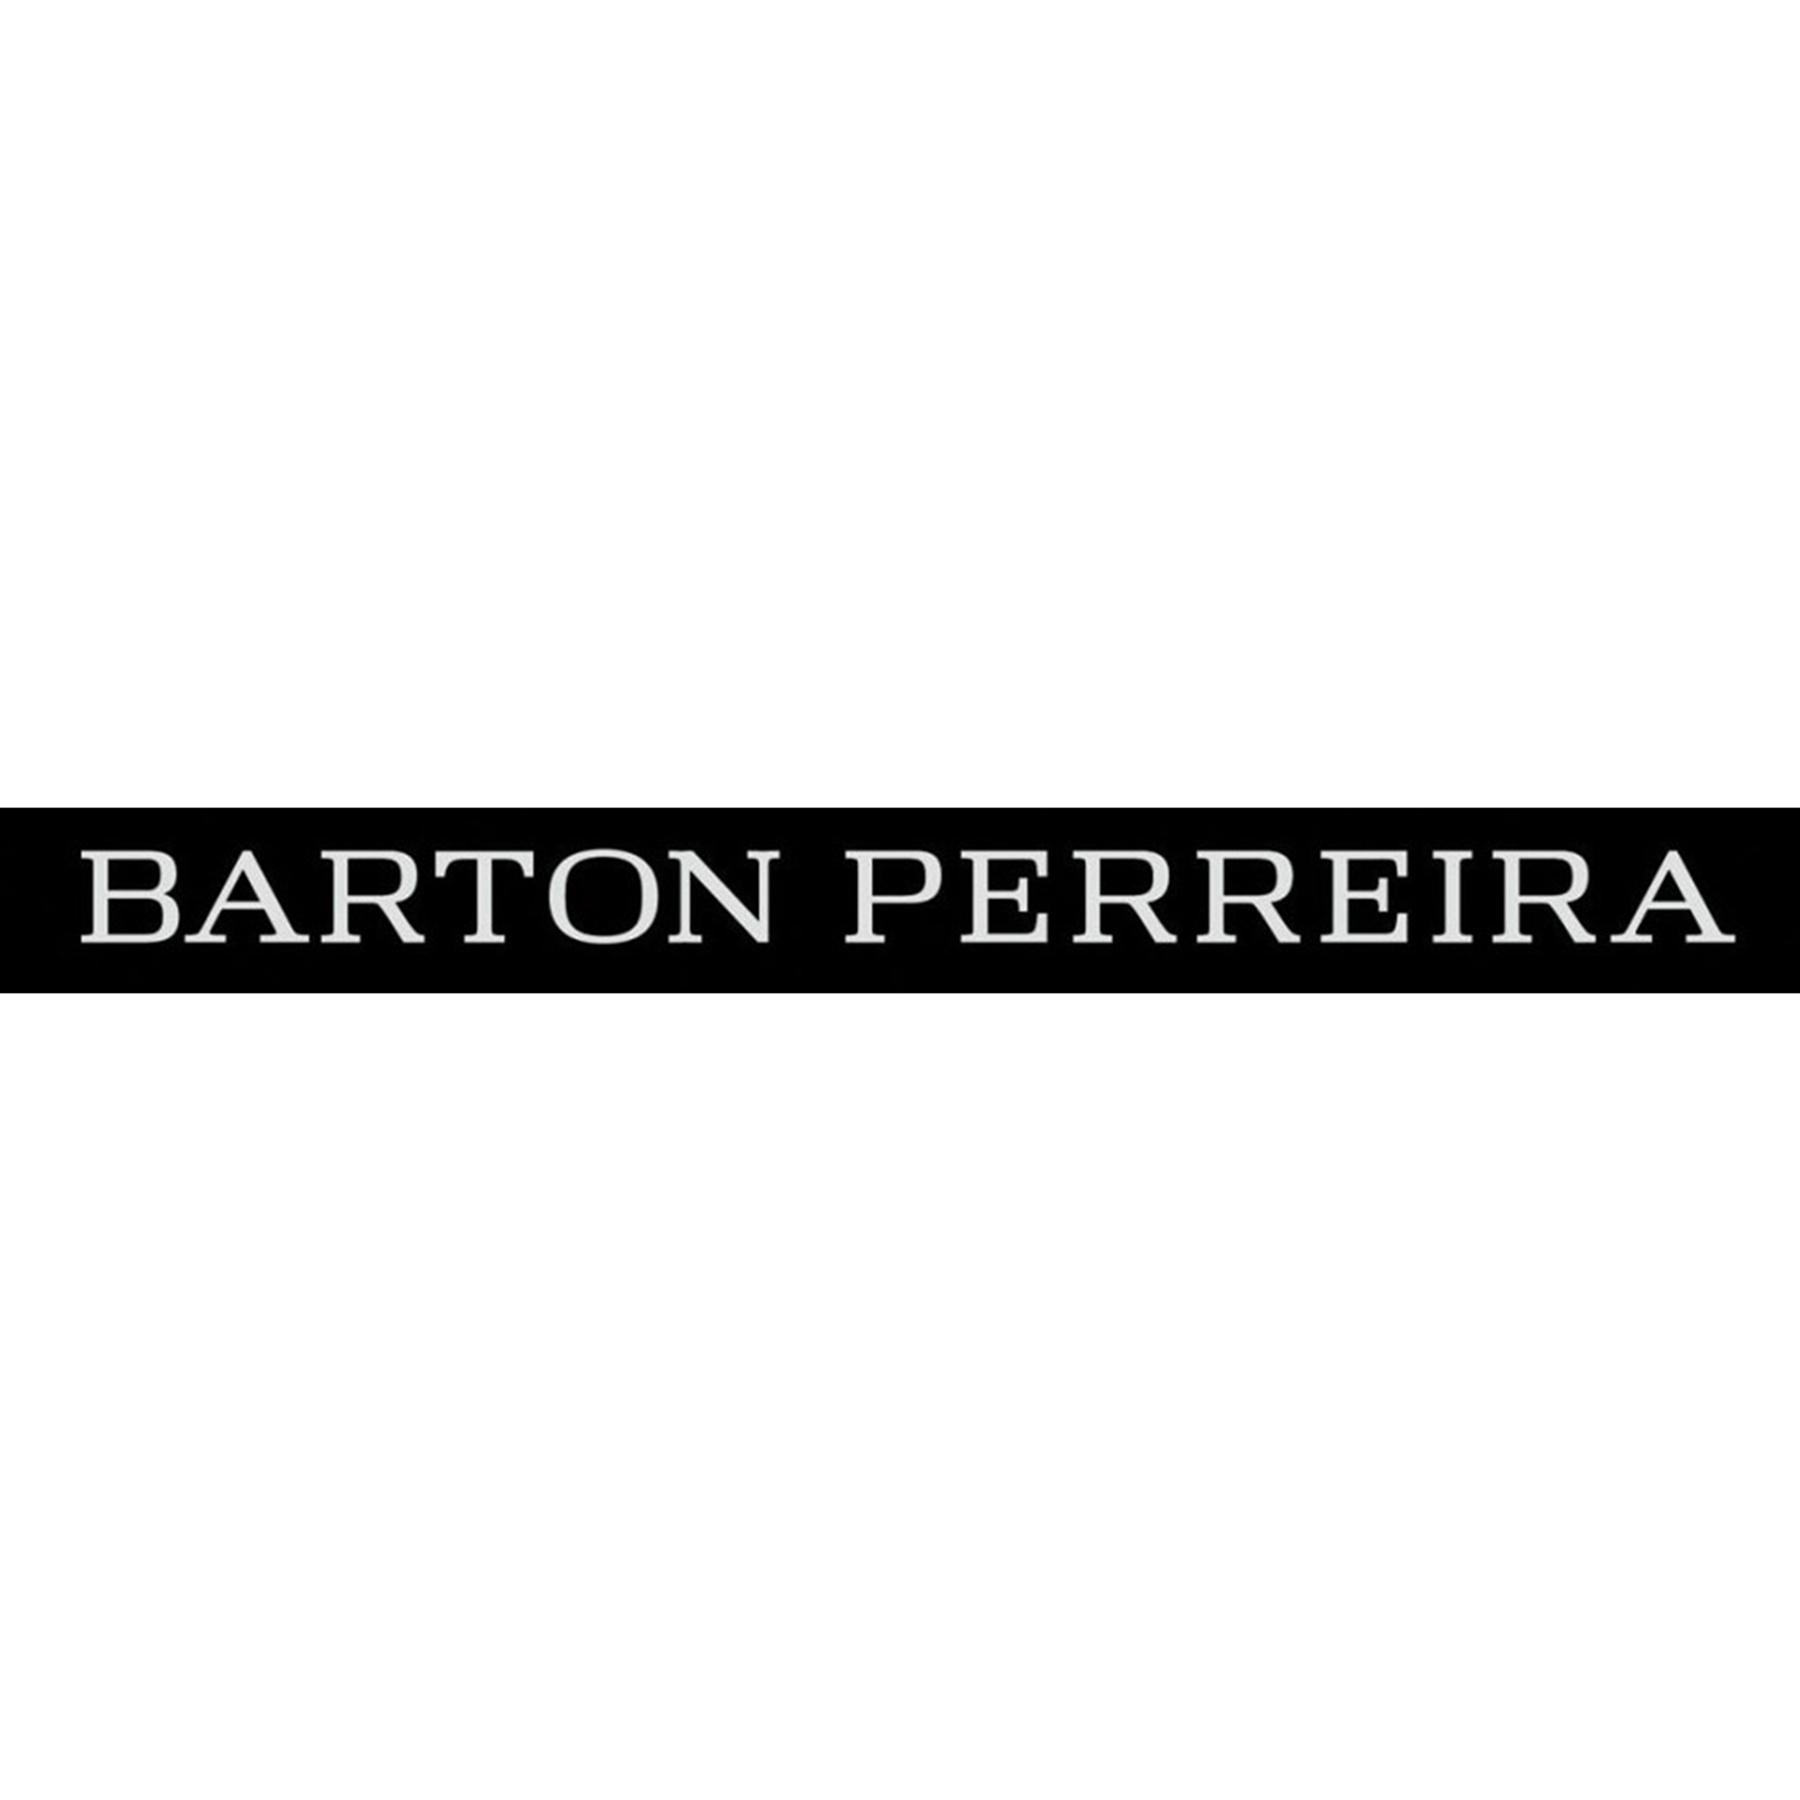 BARTON PERRIERA LOGO.png